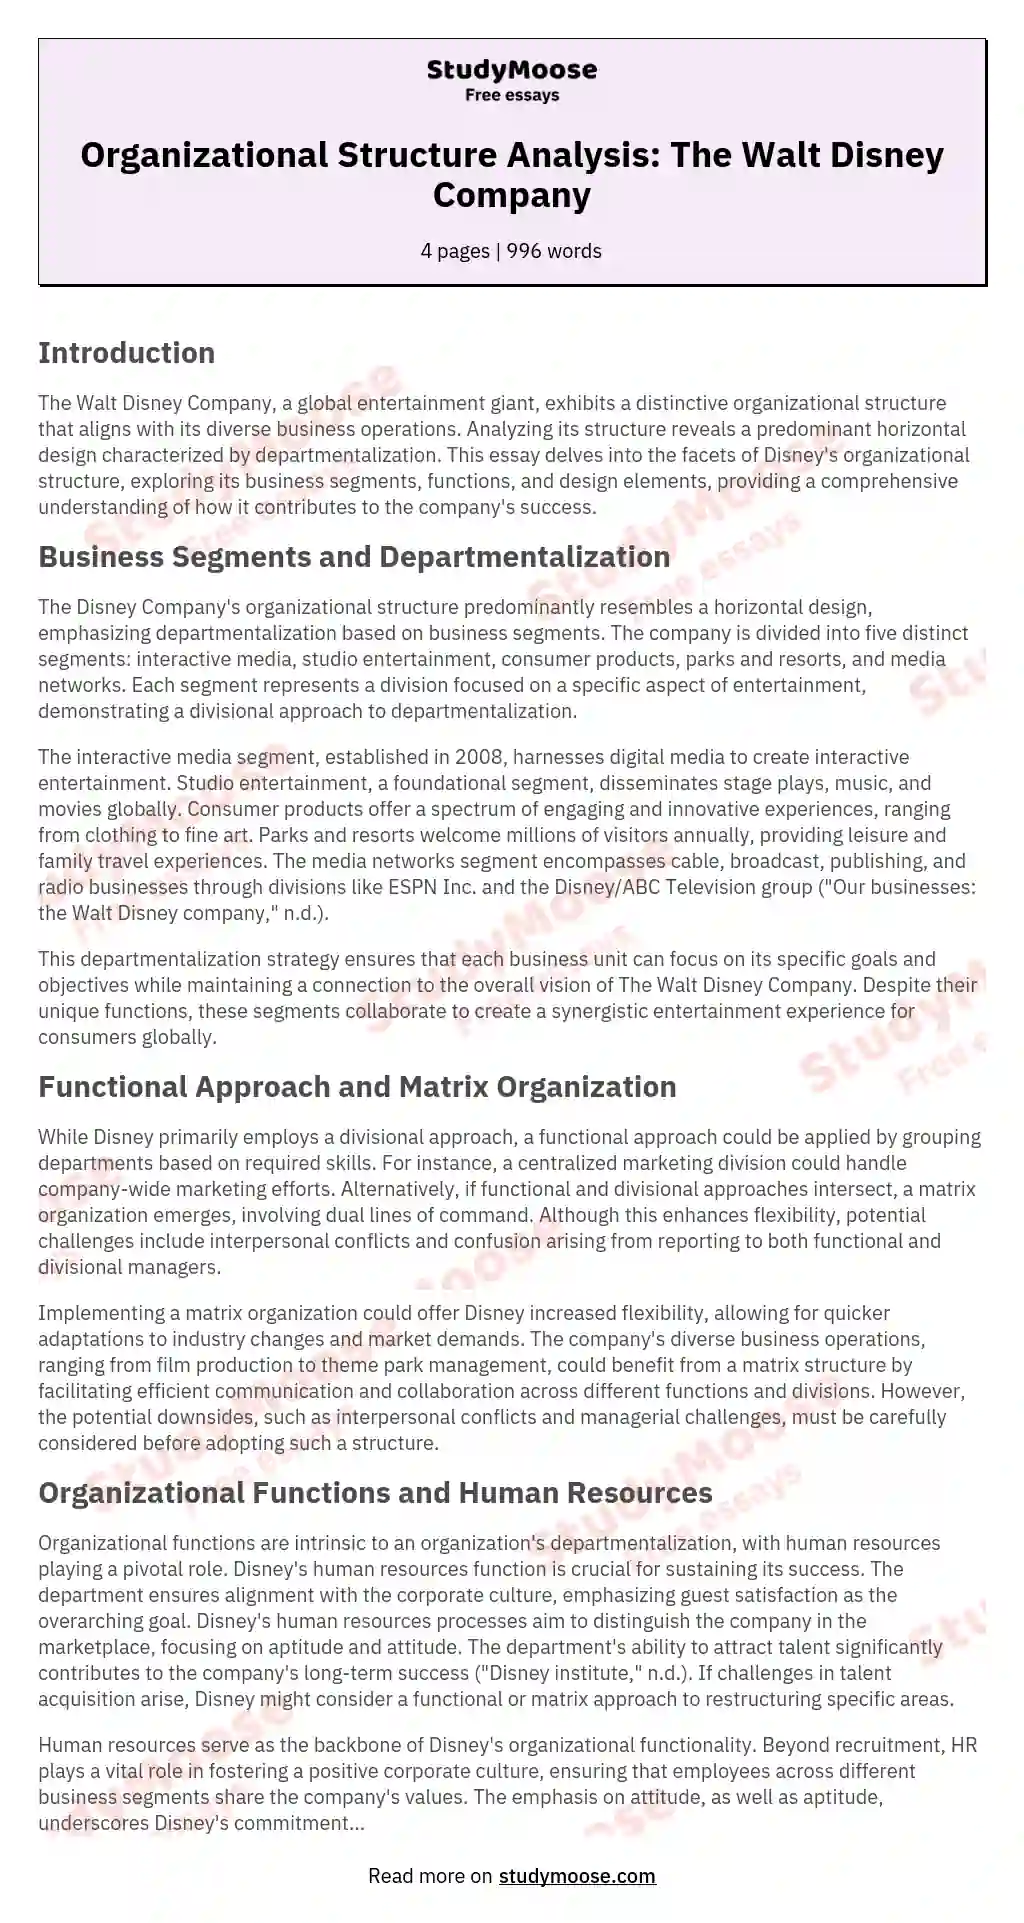 Organizational Structure Analysis: The Walt Disney Company essay